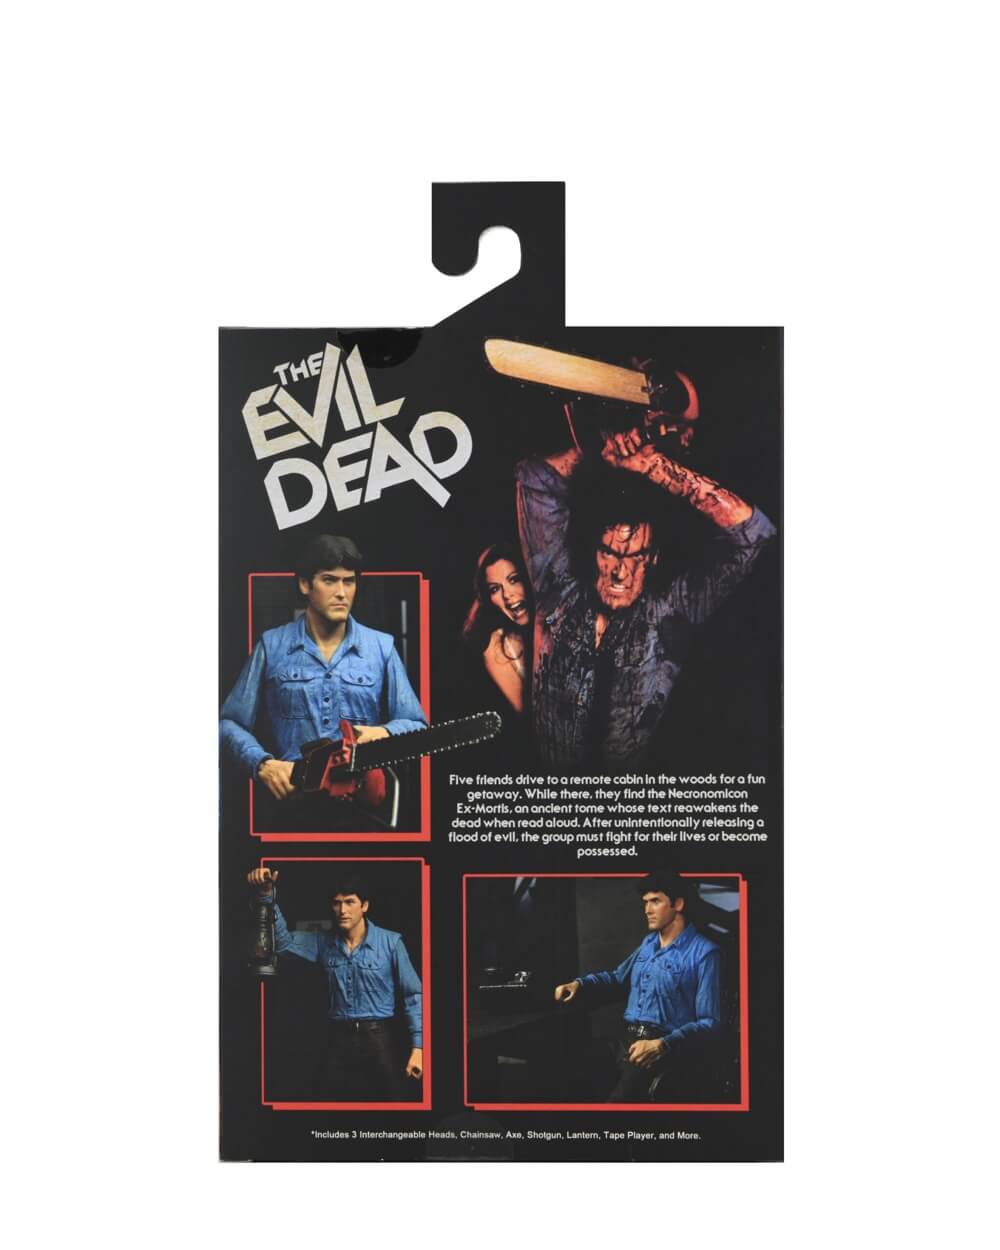 Ultimate Ash The Evil Dead 40th Anniversary Scale Action Figure